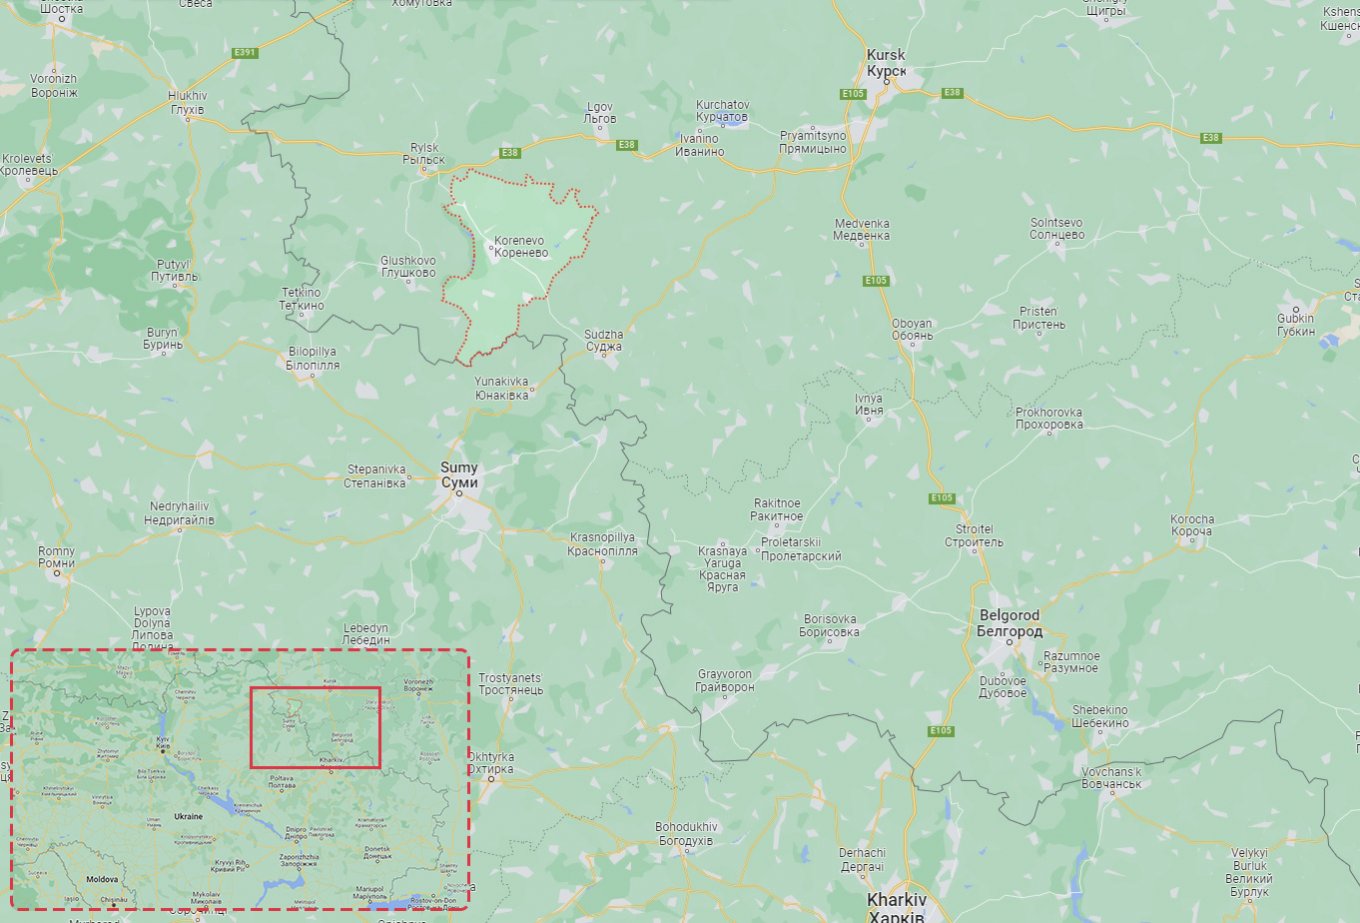 Another region of borderline disturbance is the Korenevsky District northwest of Belgorod